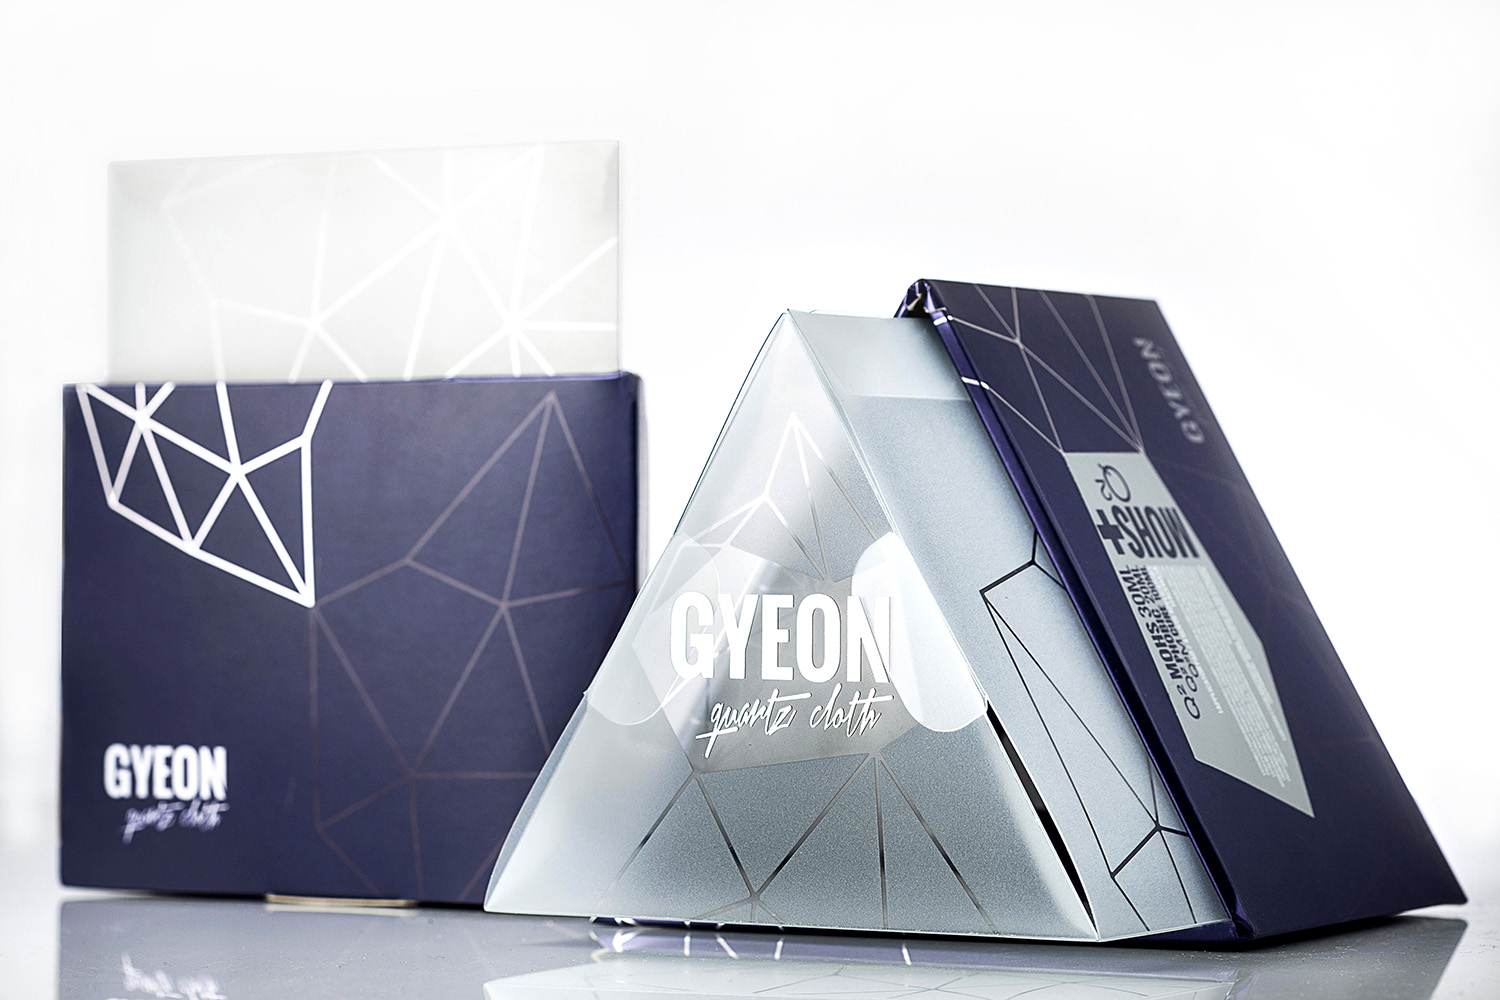 Gyeon Quartz verpakking